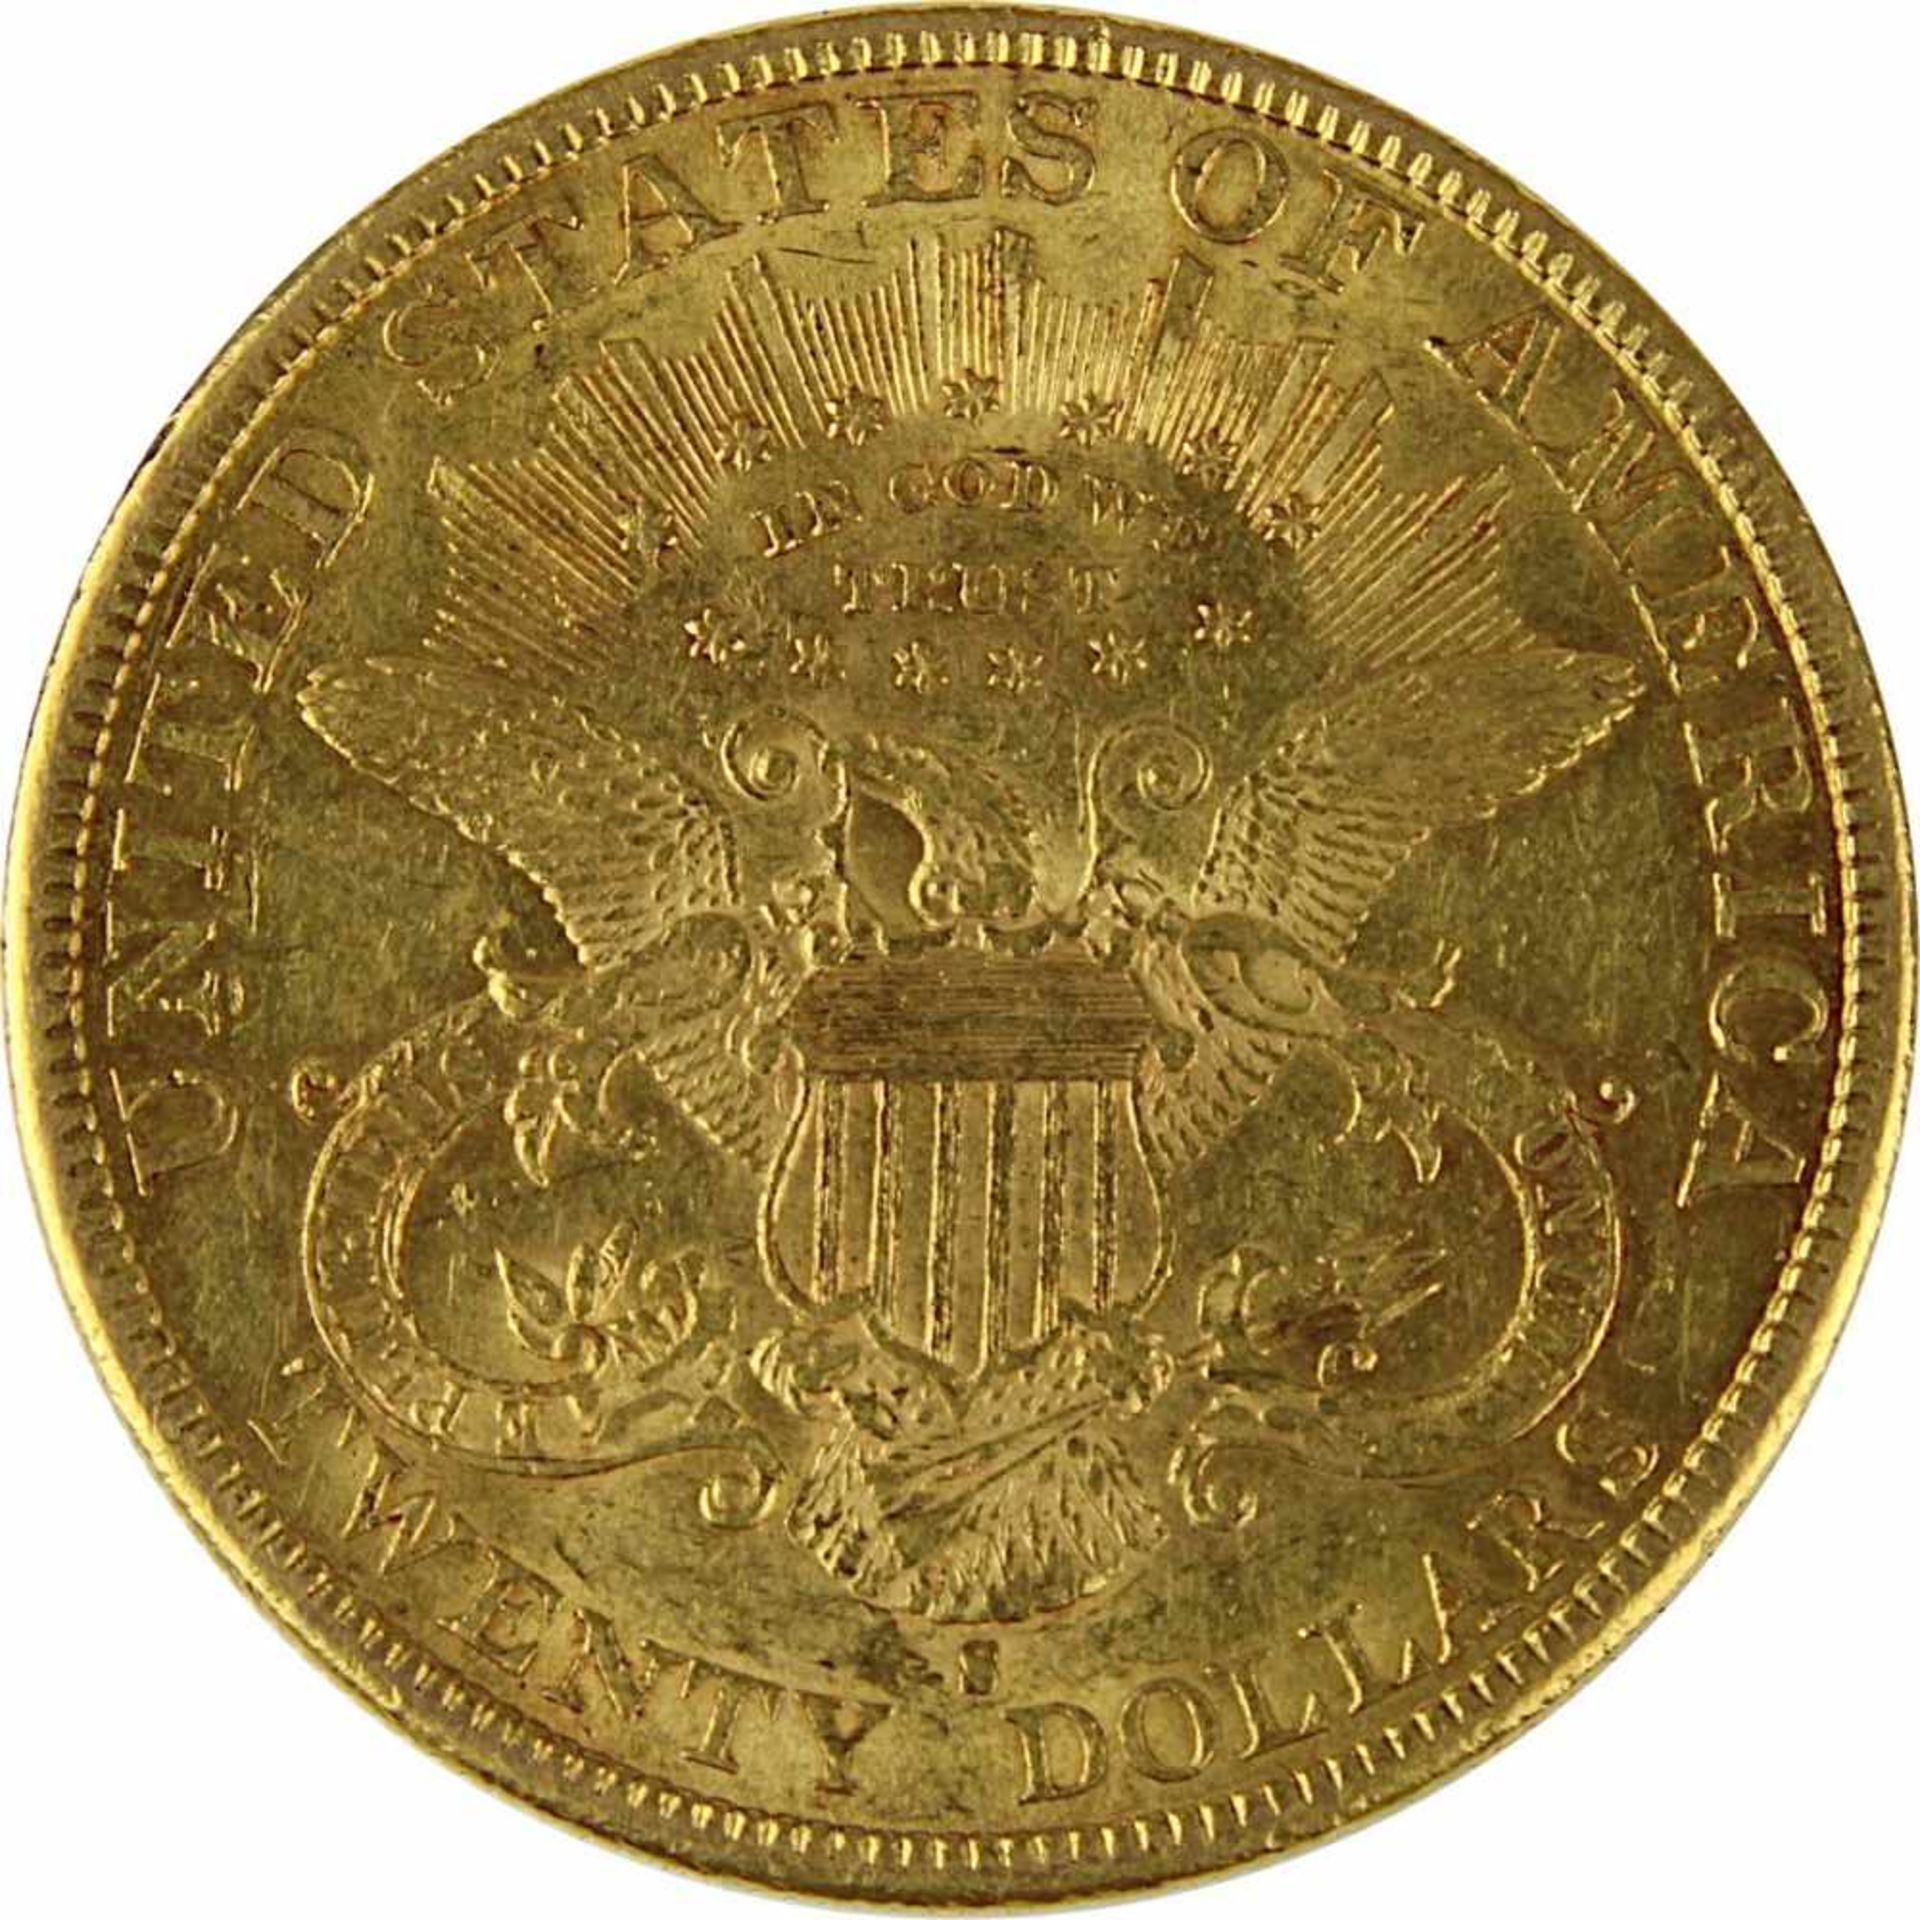 Goldmünze zu 20 Dollar, USA 1894, 900er Gold, Gewicht 1 Unze Feingold, Coroned Head / Eagle, - Bild 3 aus 3